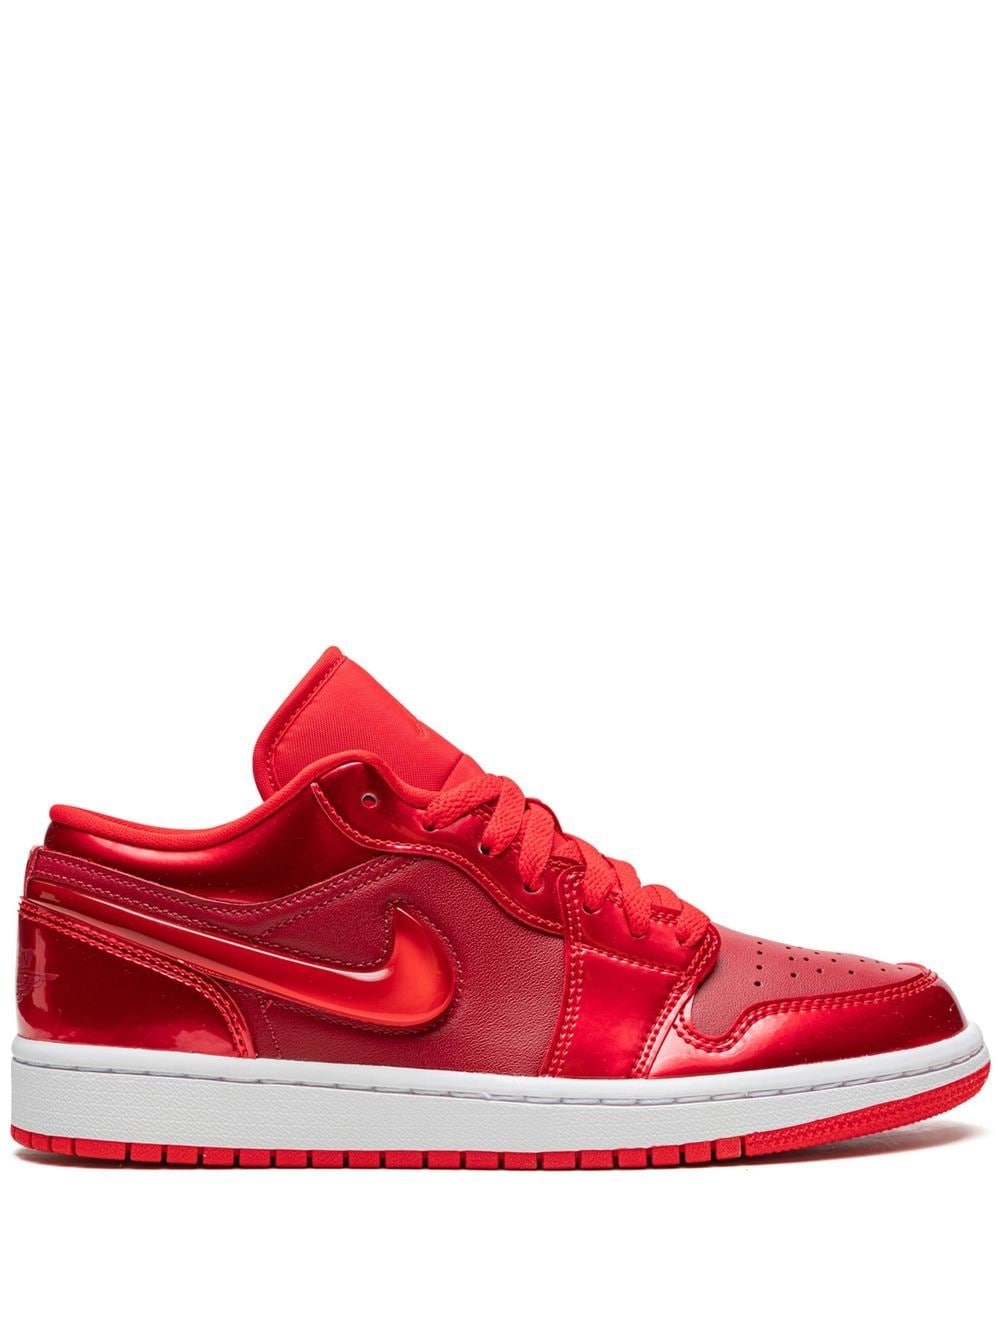 Image 1 of Nike Air Jordan 1 SE Pomegranate låga sneakers